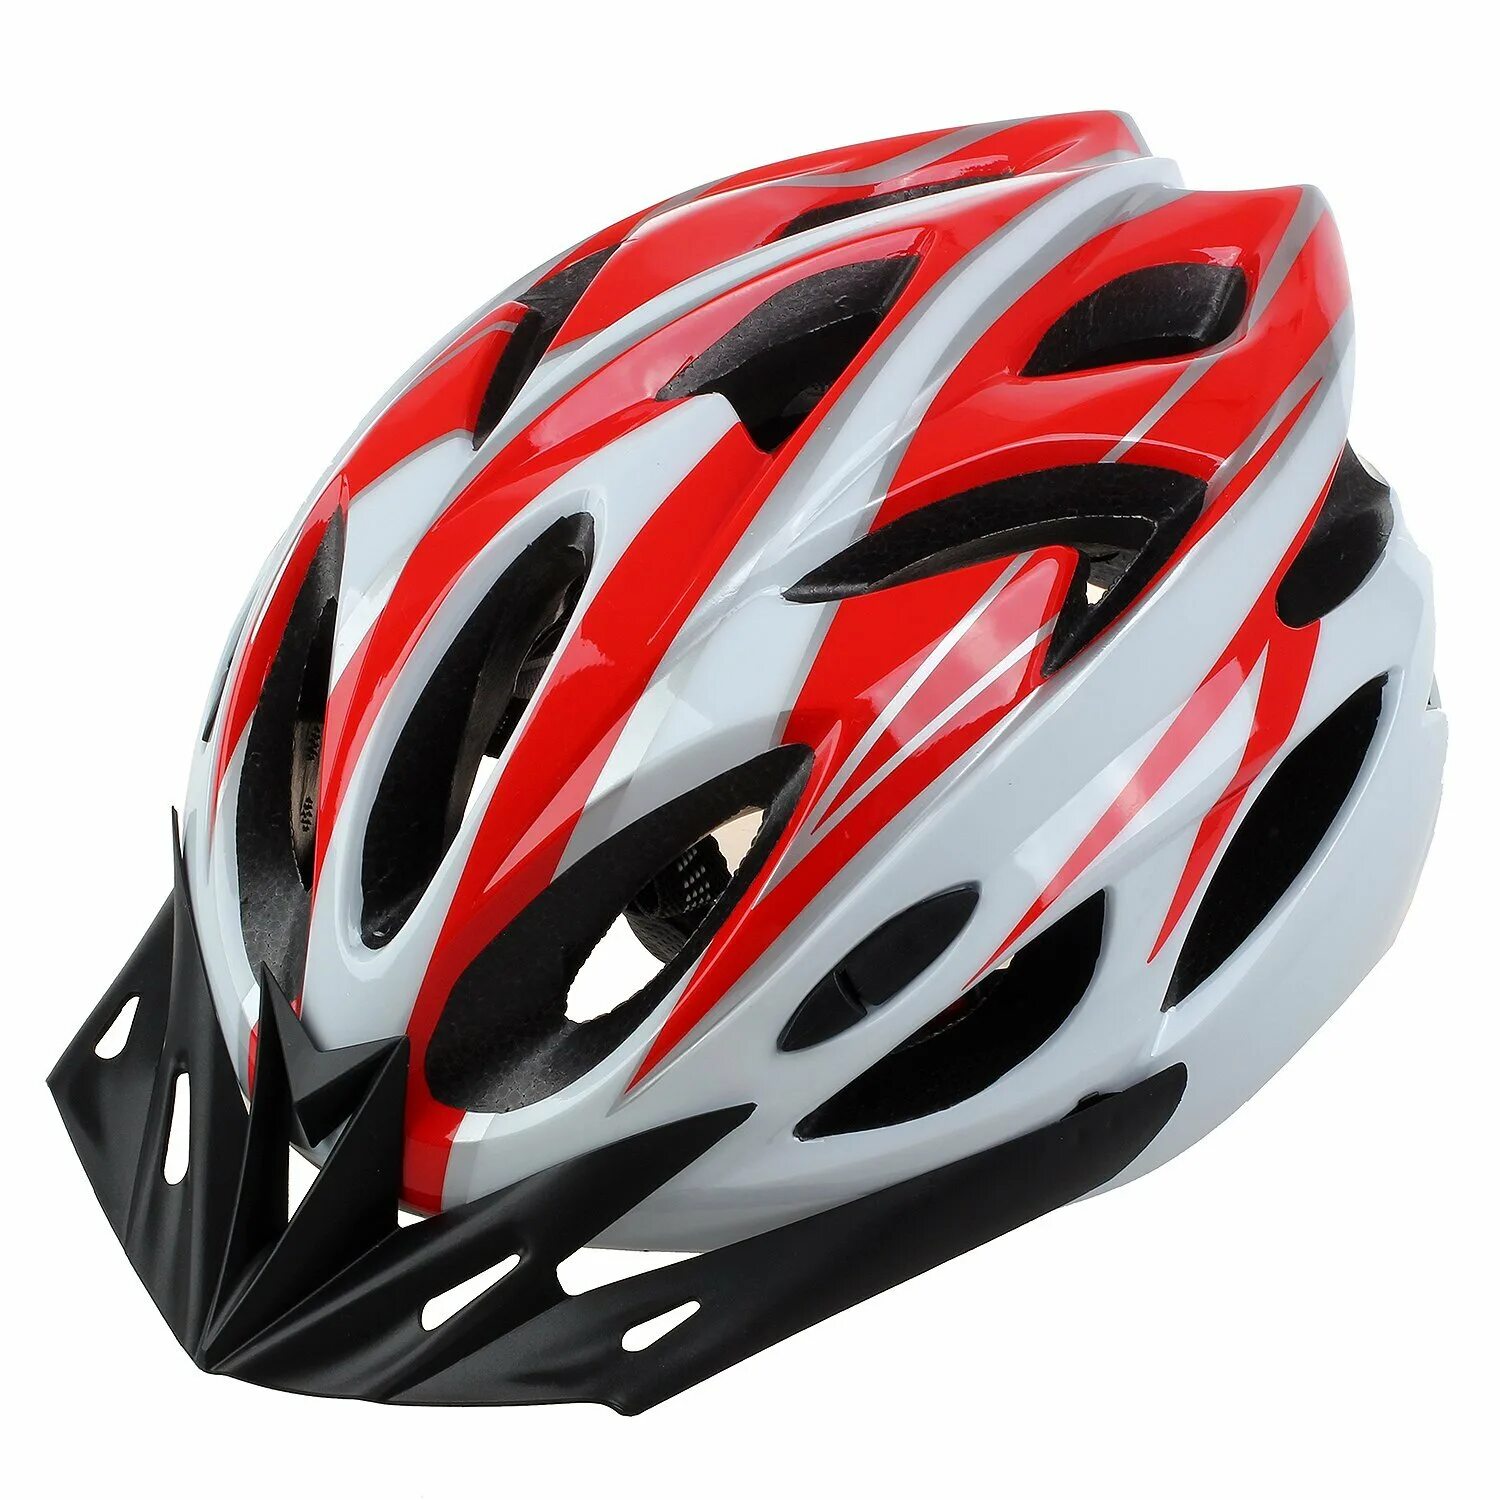 Шлем для велосипеда взрослый. Helmet шлем велосипедный. TDL 'шлем велосипедный. Велосипедный шлем Terra Vince Sport. Шлем dhb МТБ.